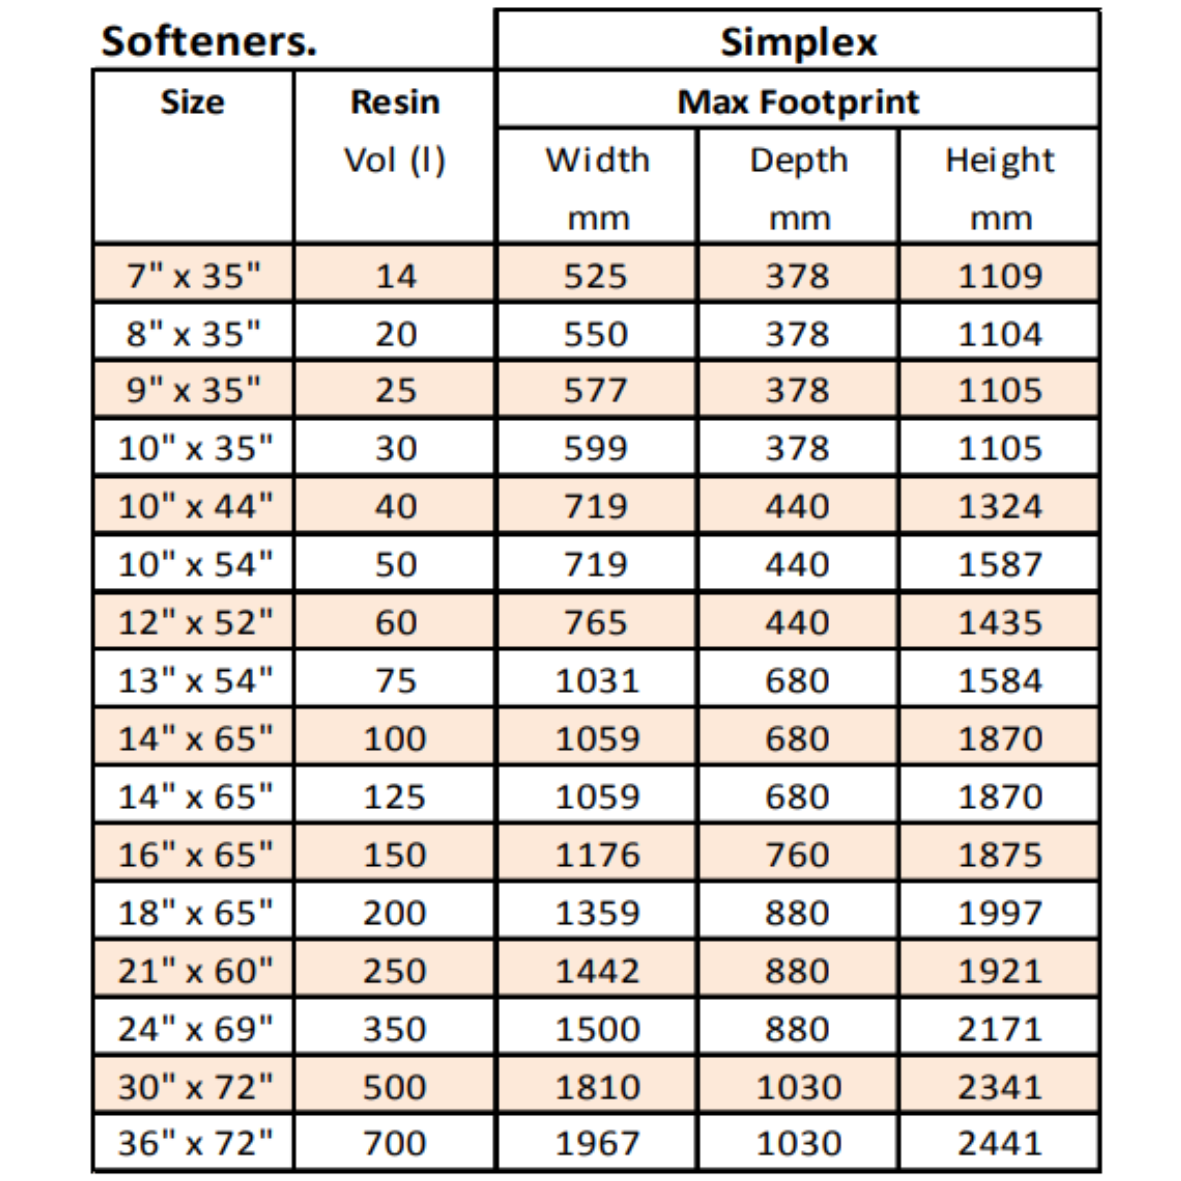 10" x 35", 30L, Simplex Water Softener, Autotrol 255 Time Controller, 1.2m³/hr